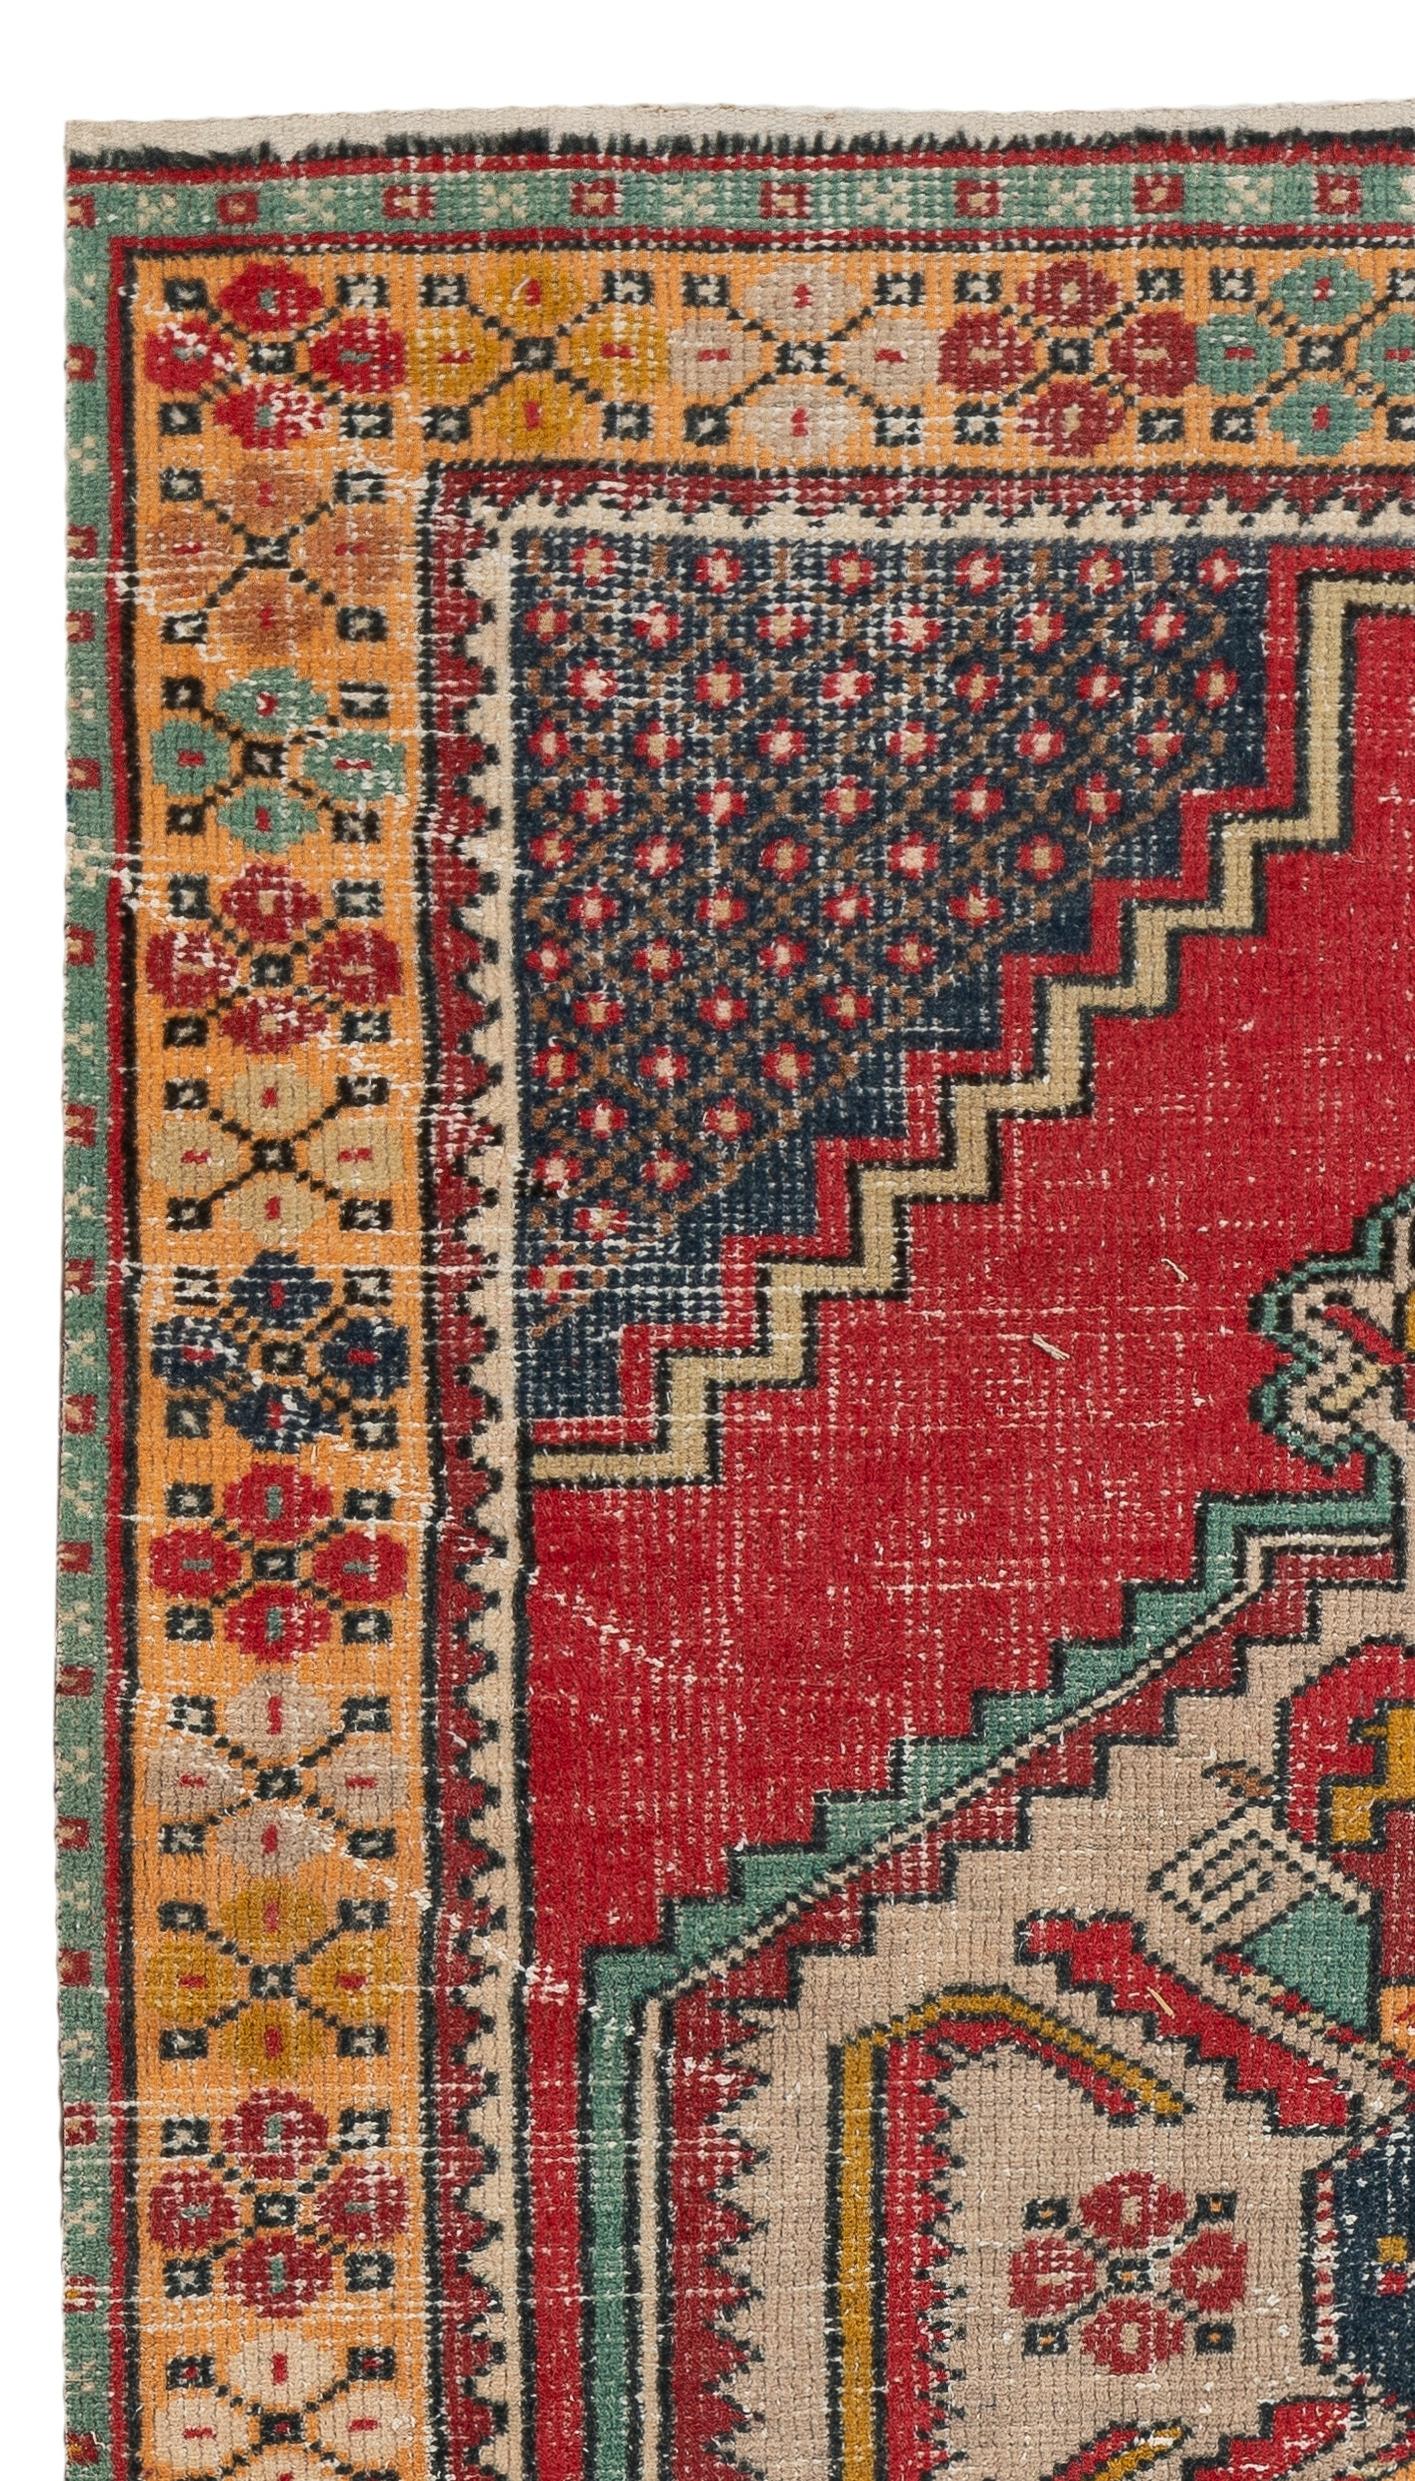 Tribal 3.6x6 Ft Vintage Handmade Turkish Wool Oriental Rug in Vibrant & Warm Colors For Sale